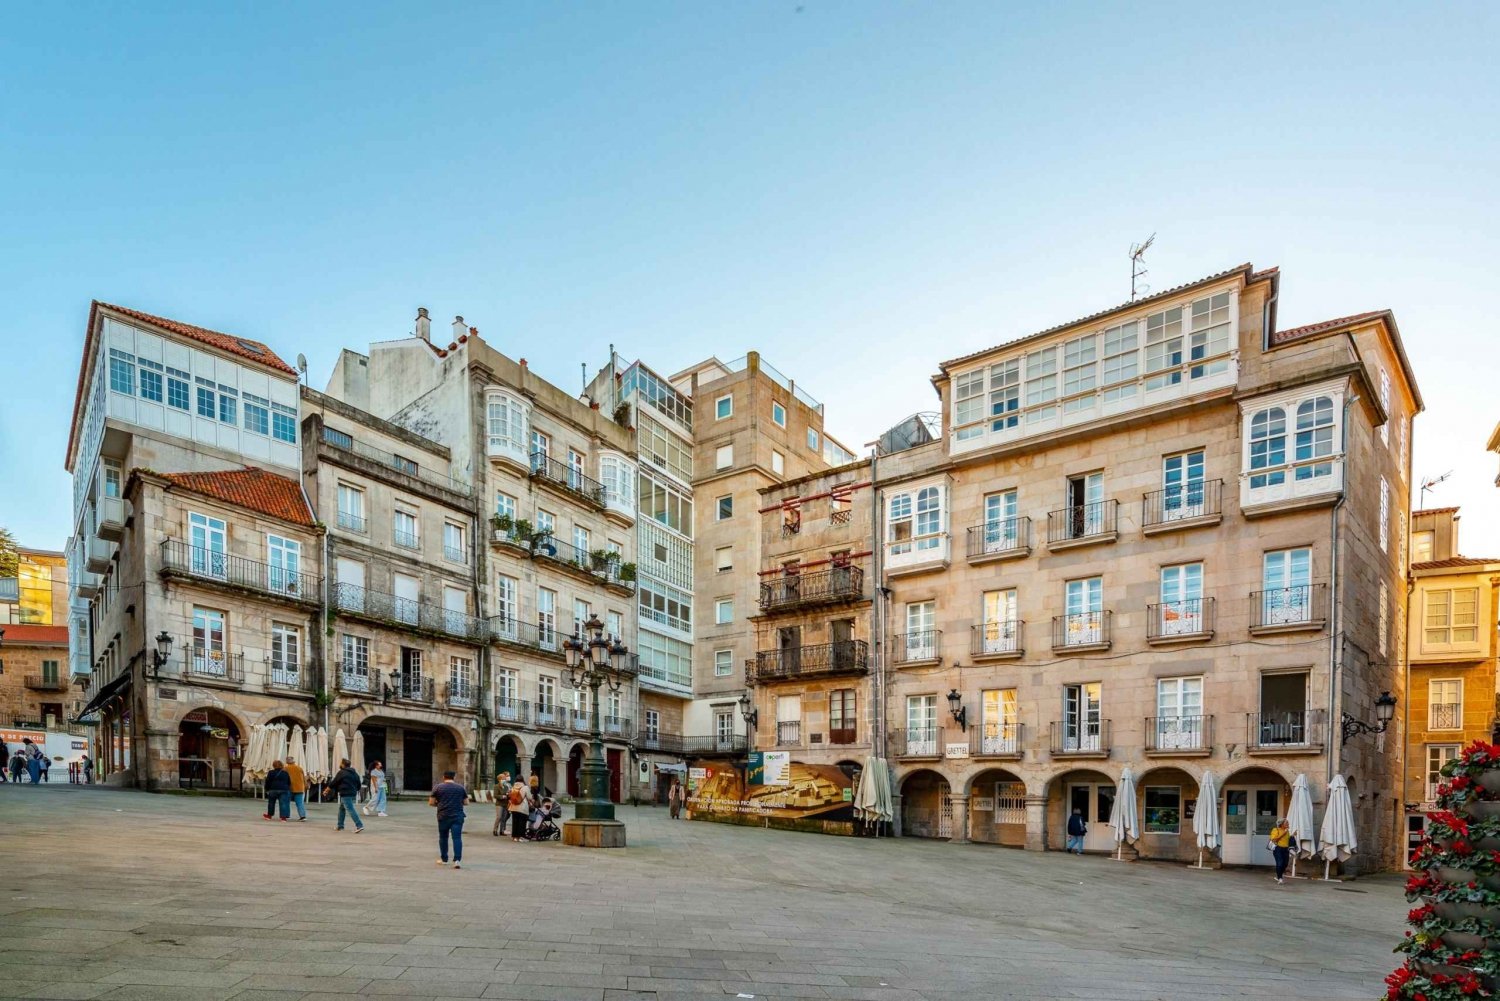 Vigo: Historical & Cultural walking Tour around the city